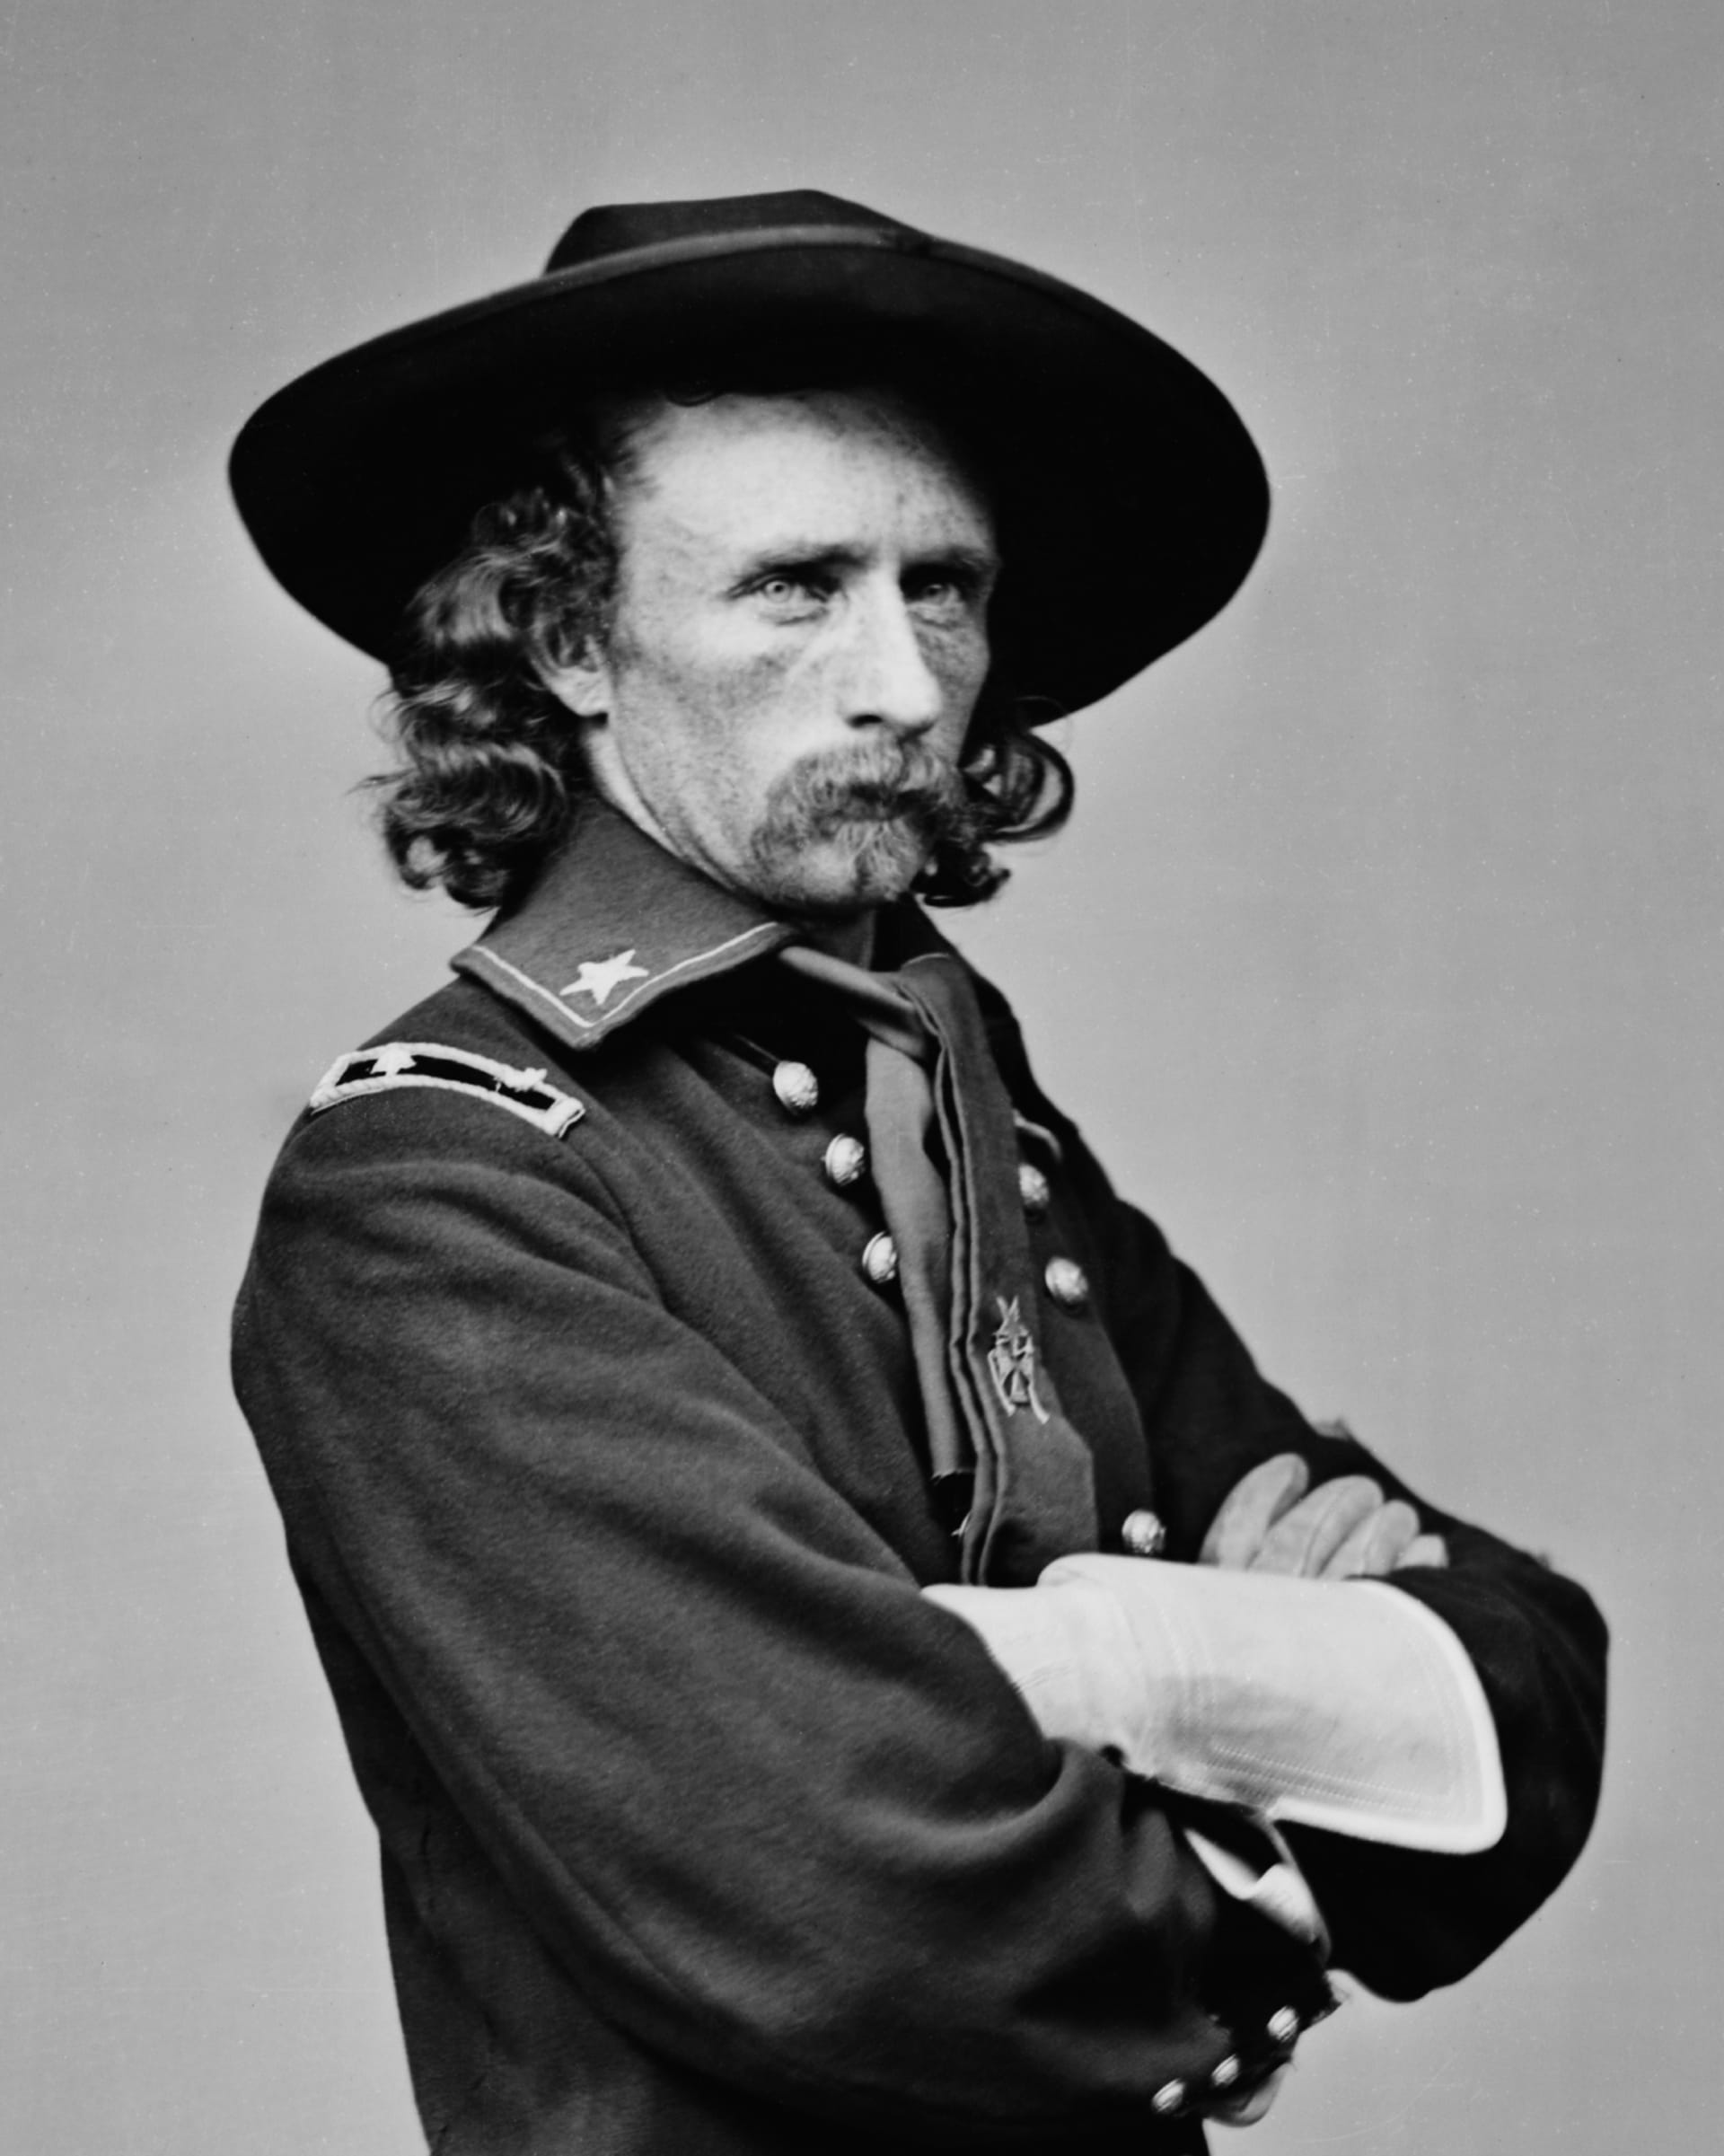 Generál Custer